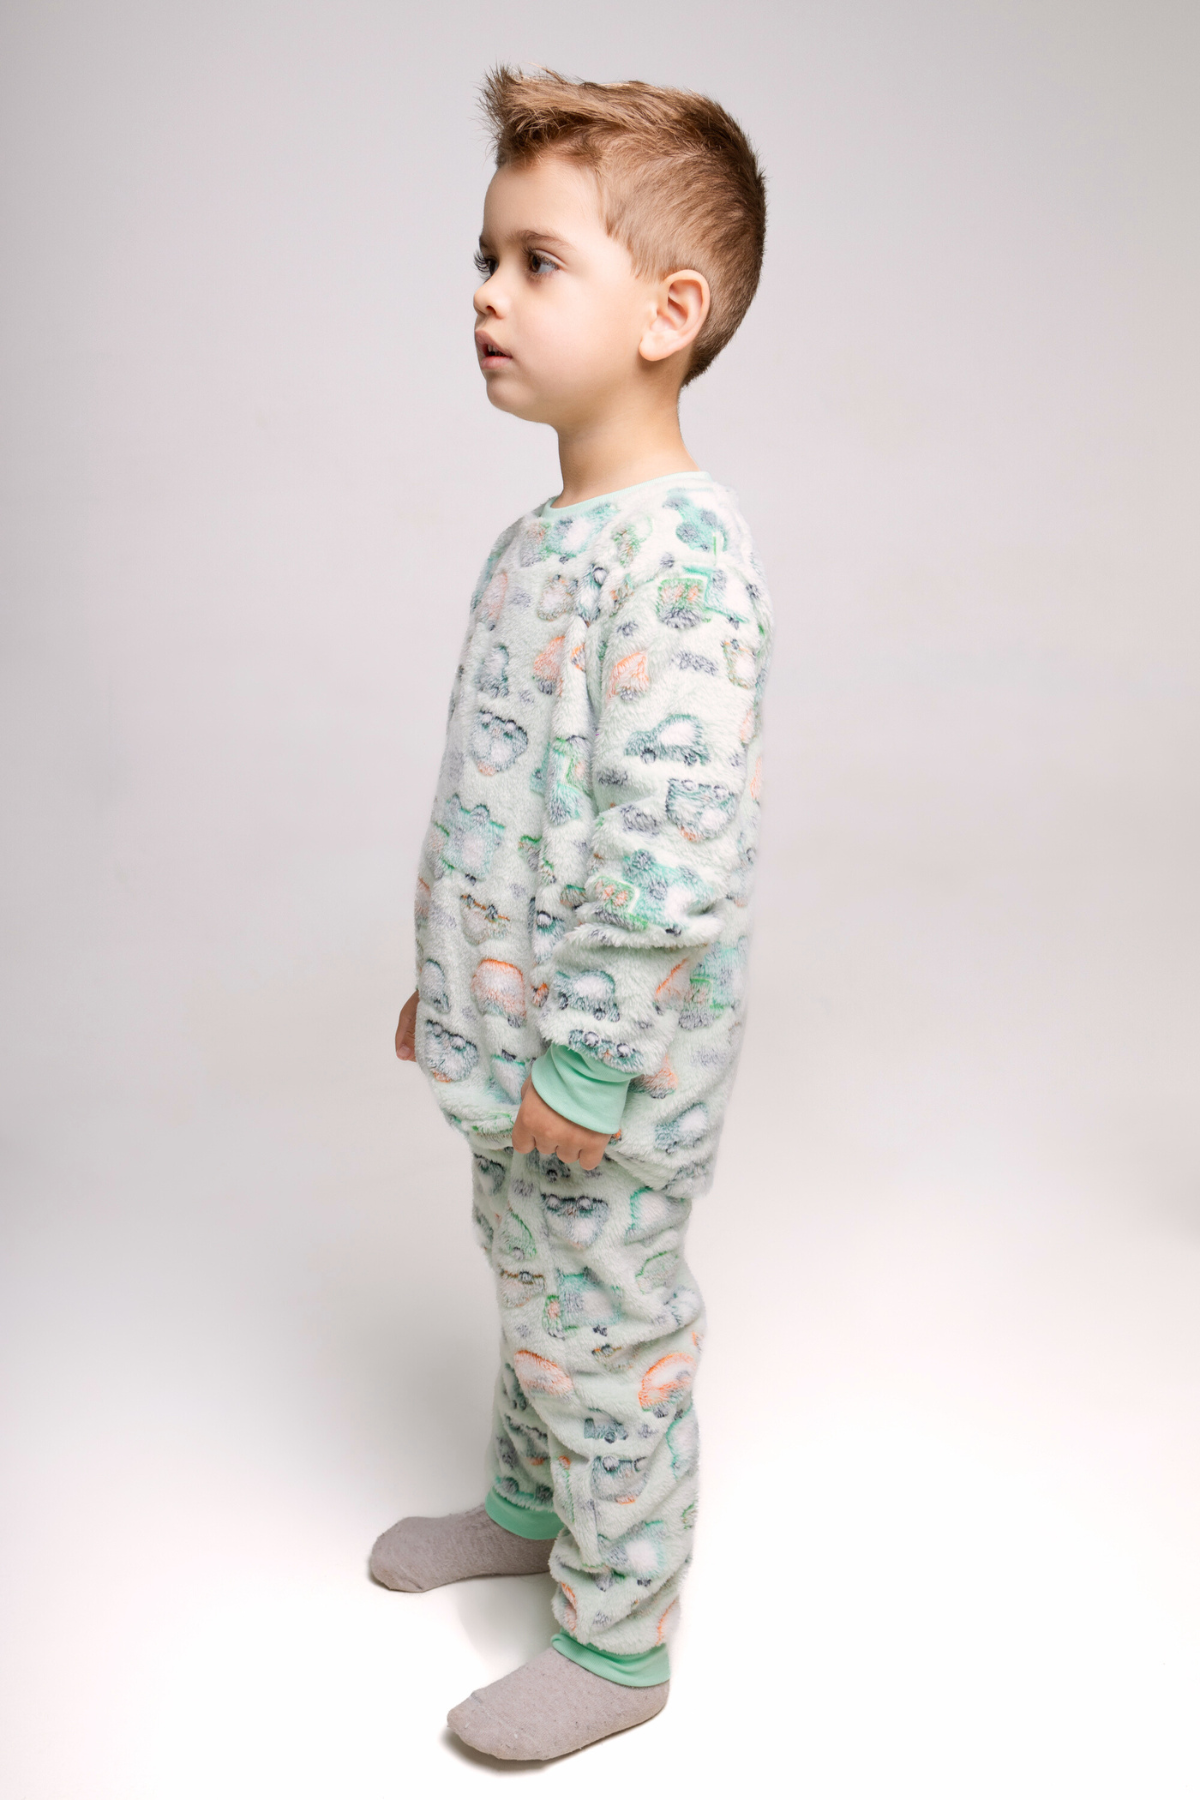 Pijama Inverno Fleece Masculino infantil